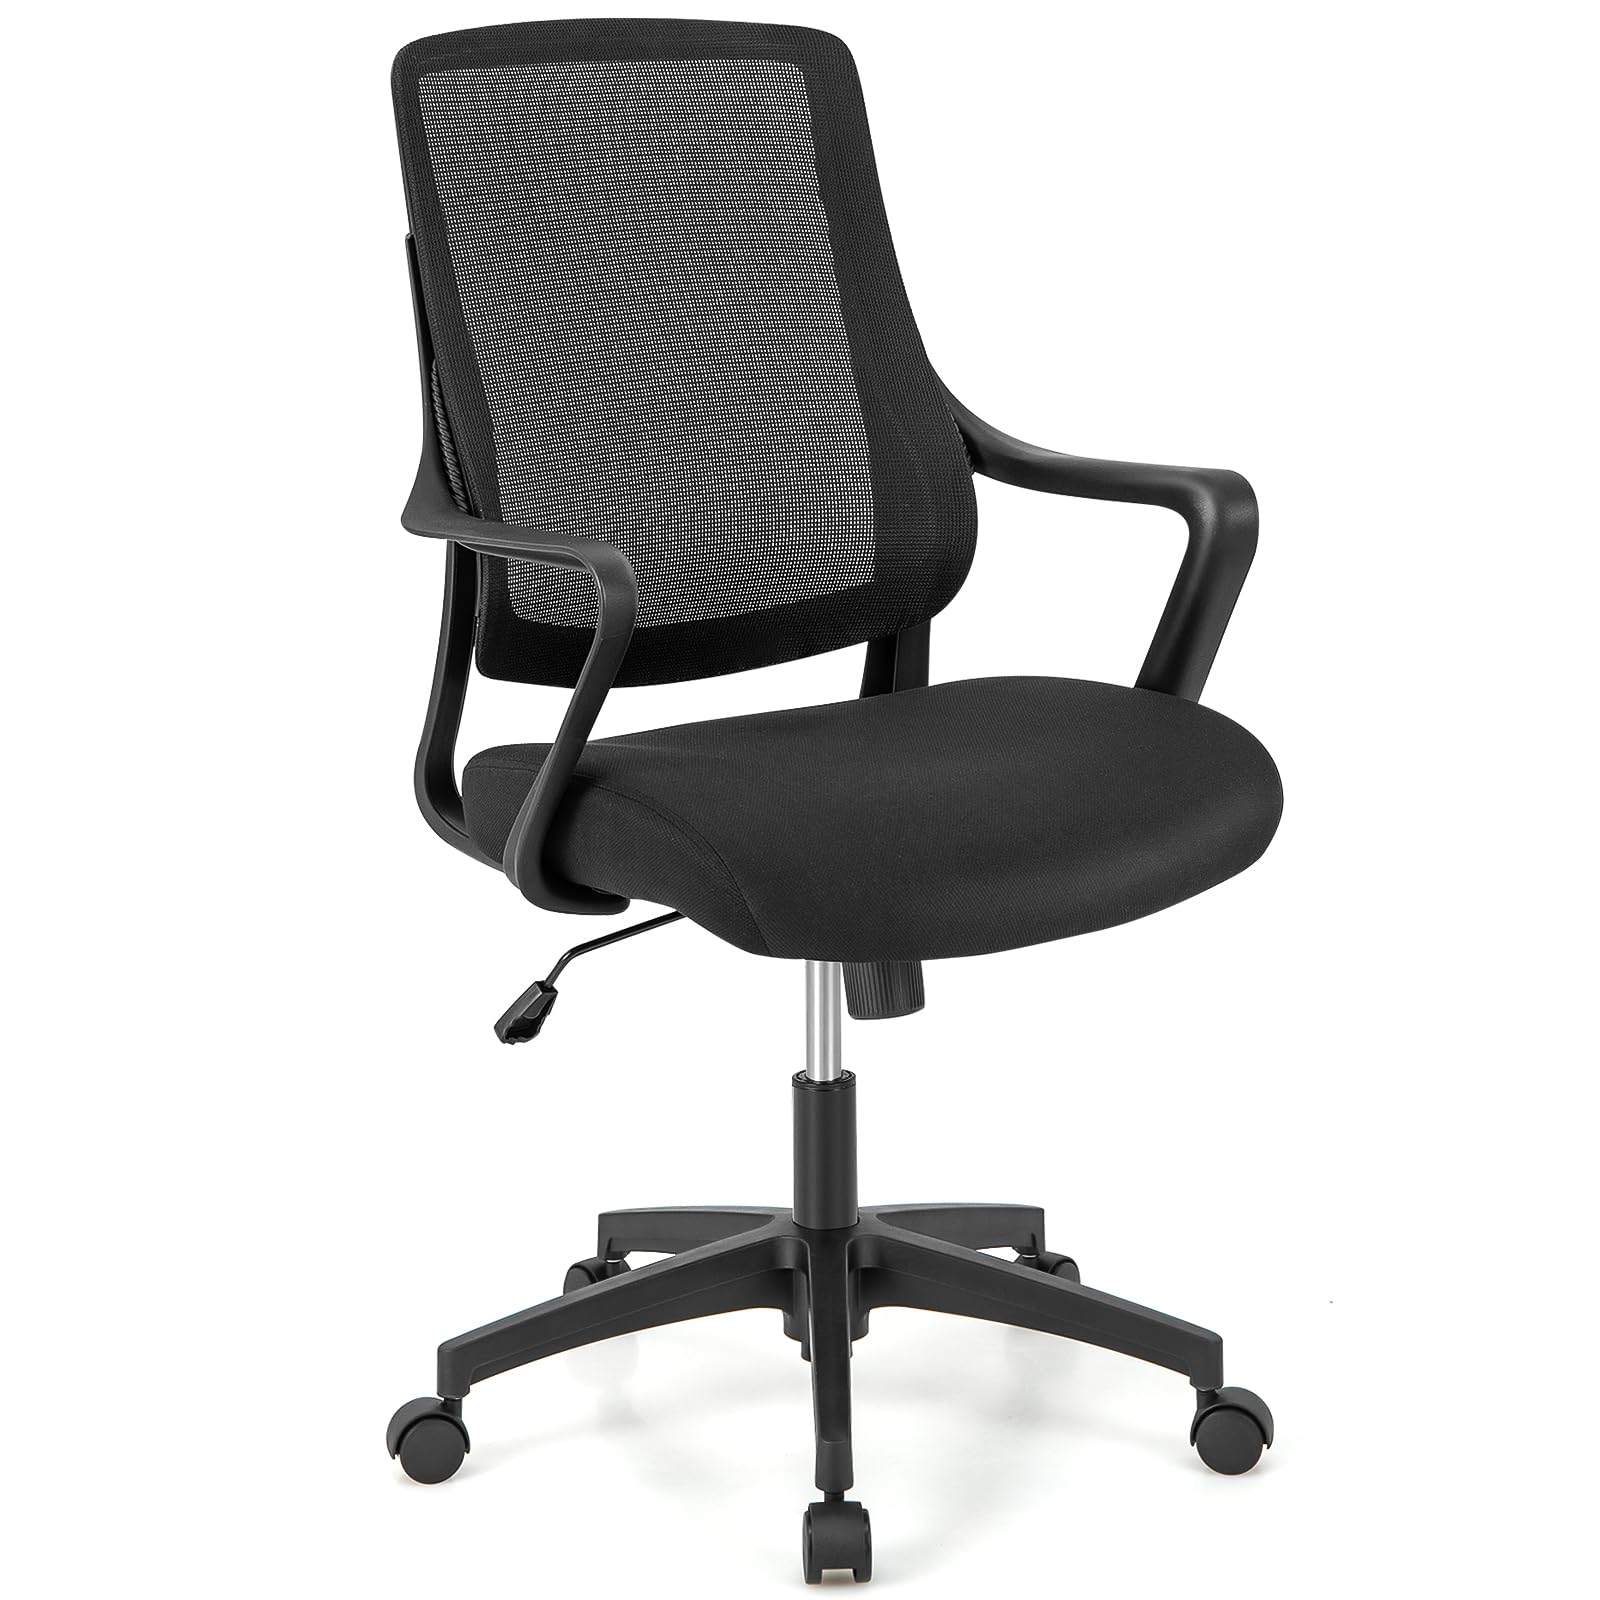 Giantex Mesh Office Desk Chair